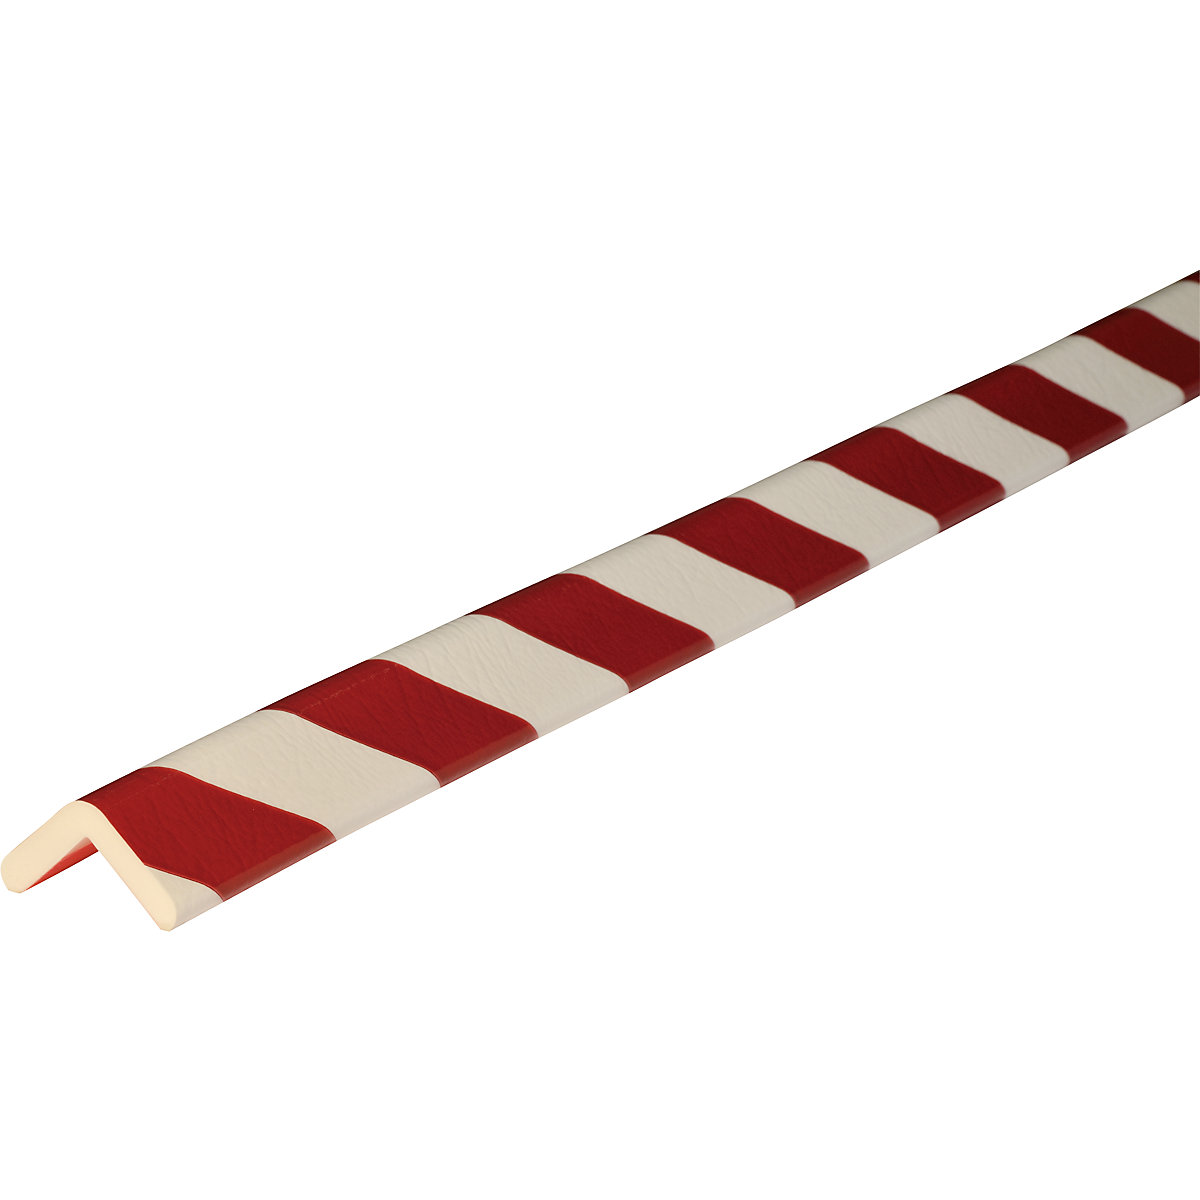 Knuffi®-hoekbescherming – SHG, type H, afmetingen individueel, per str. m, rood/wit-13